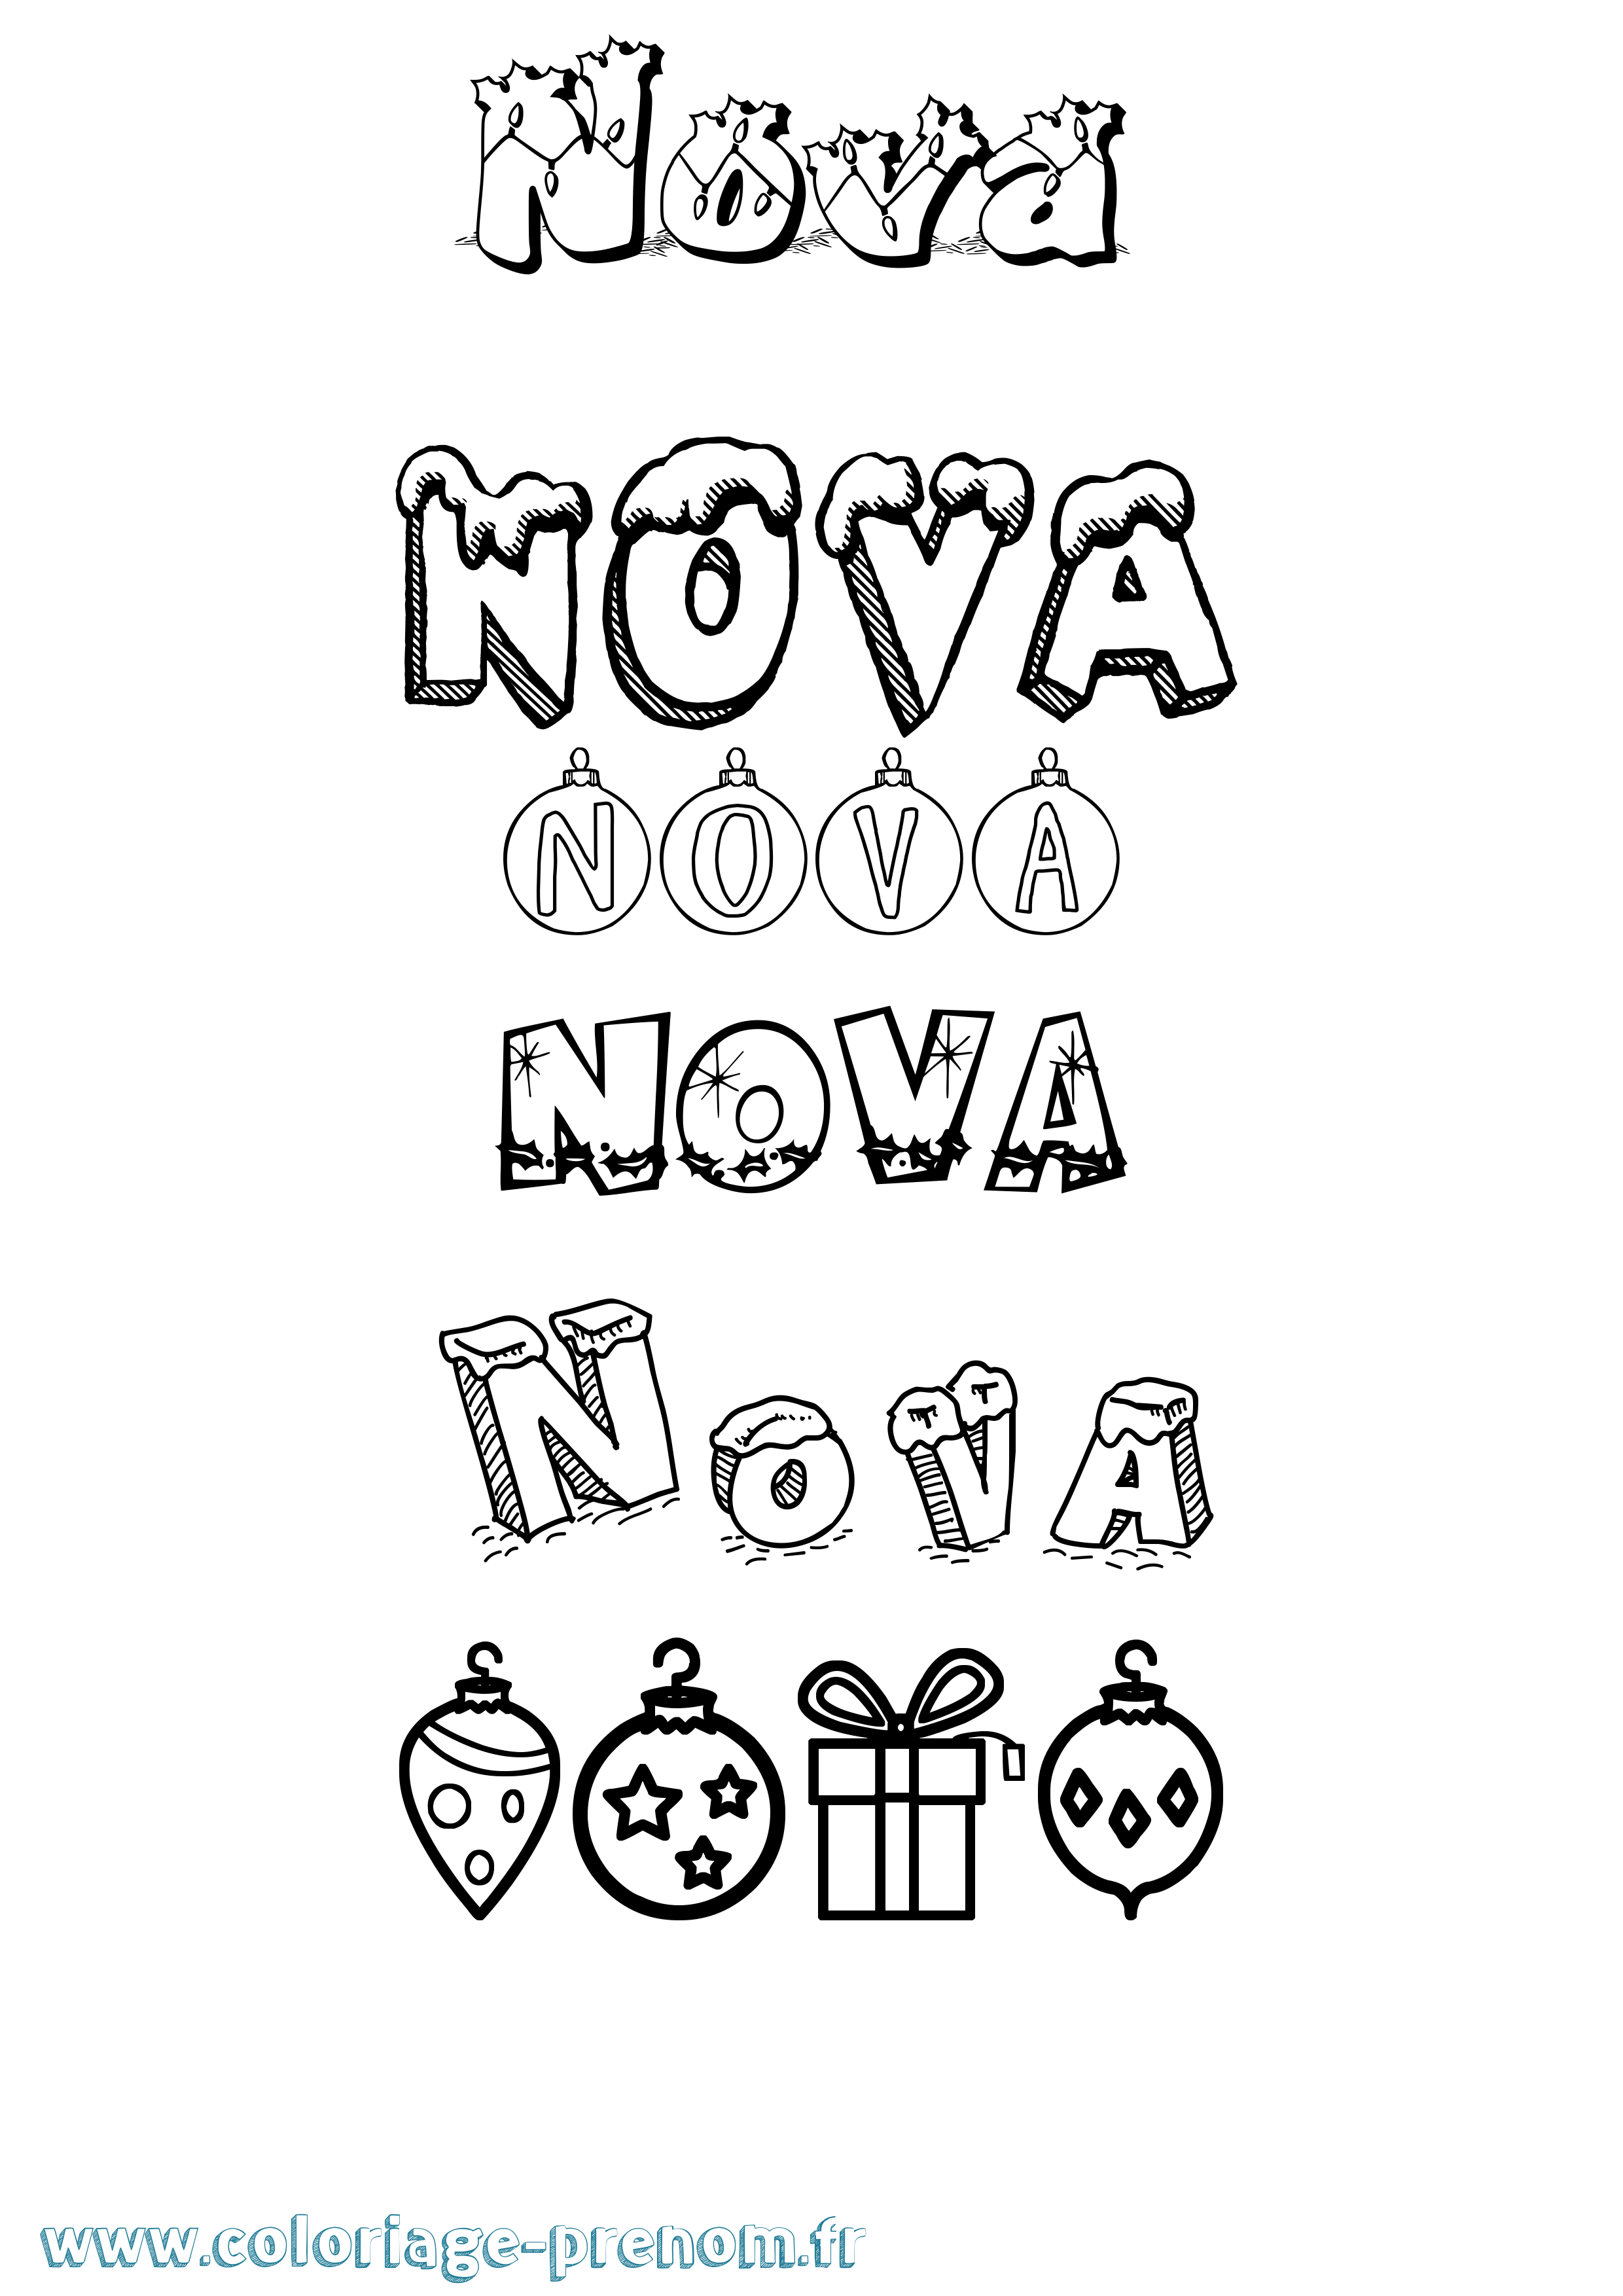 Coloriage prénom Nova Noël